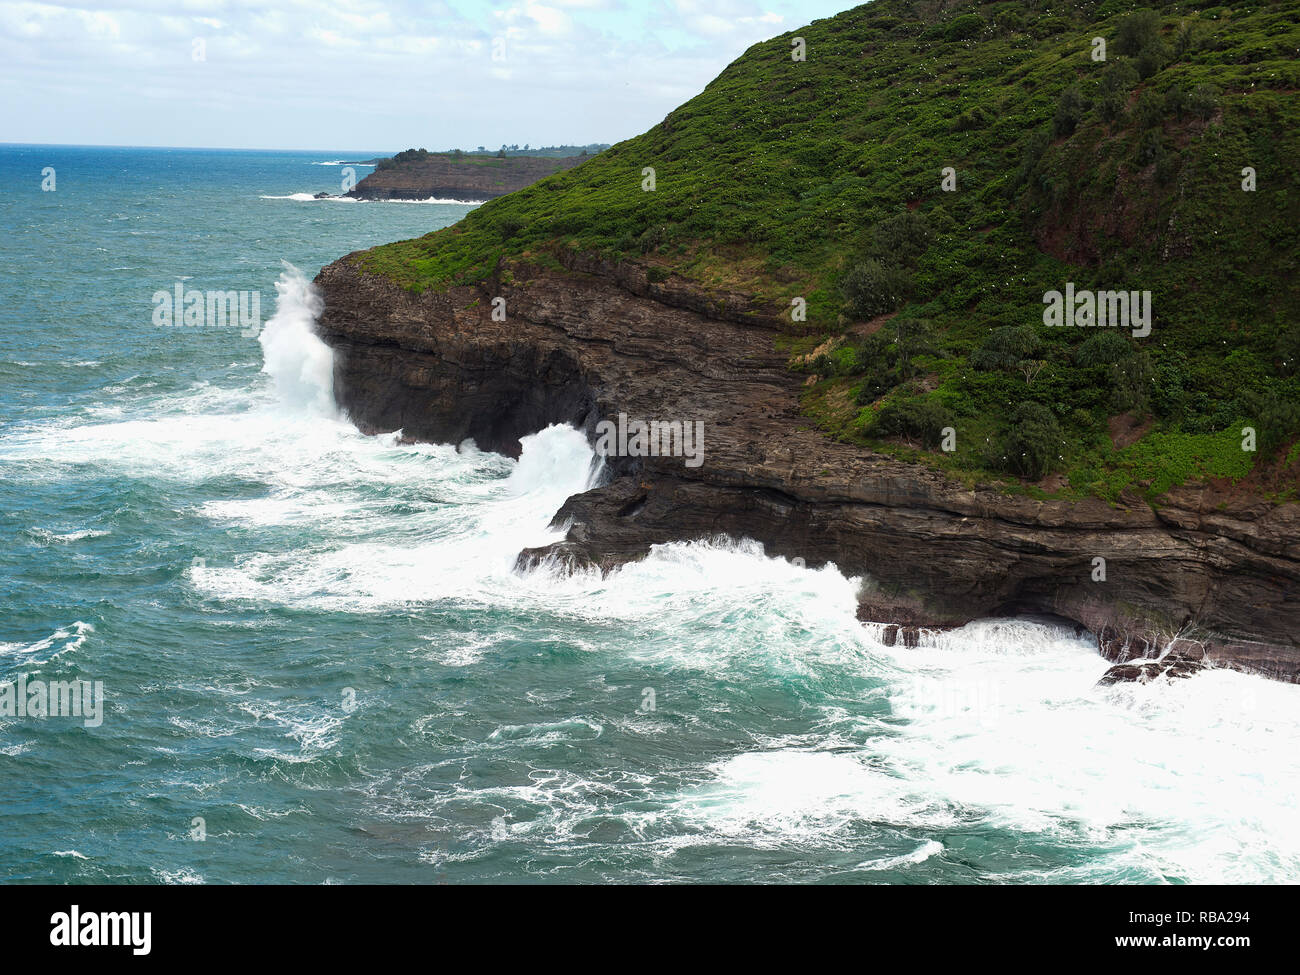 The cliffs of the Kilauea wildlife refuge dotted with sea birds. Kauai, Hawaii. Stock Photo